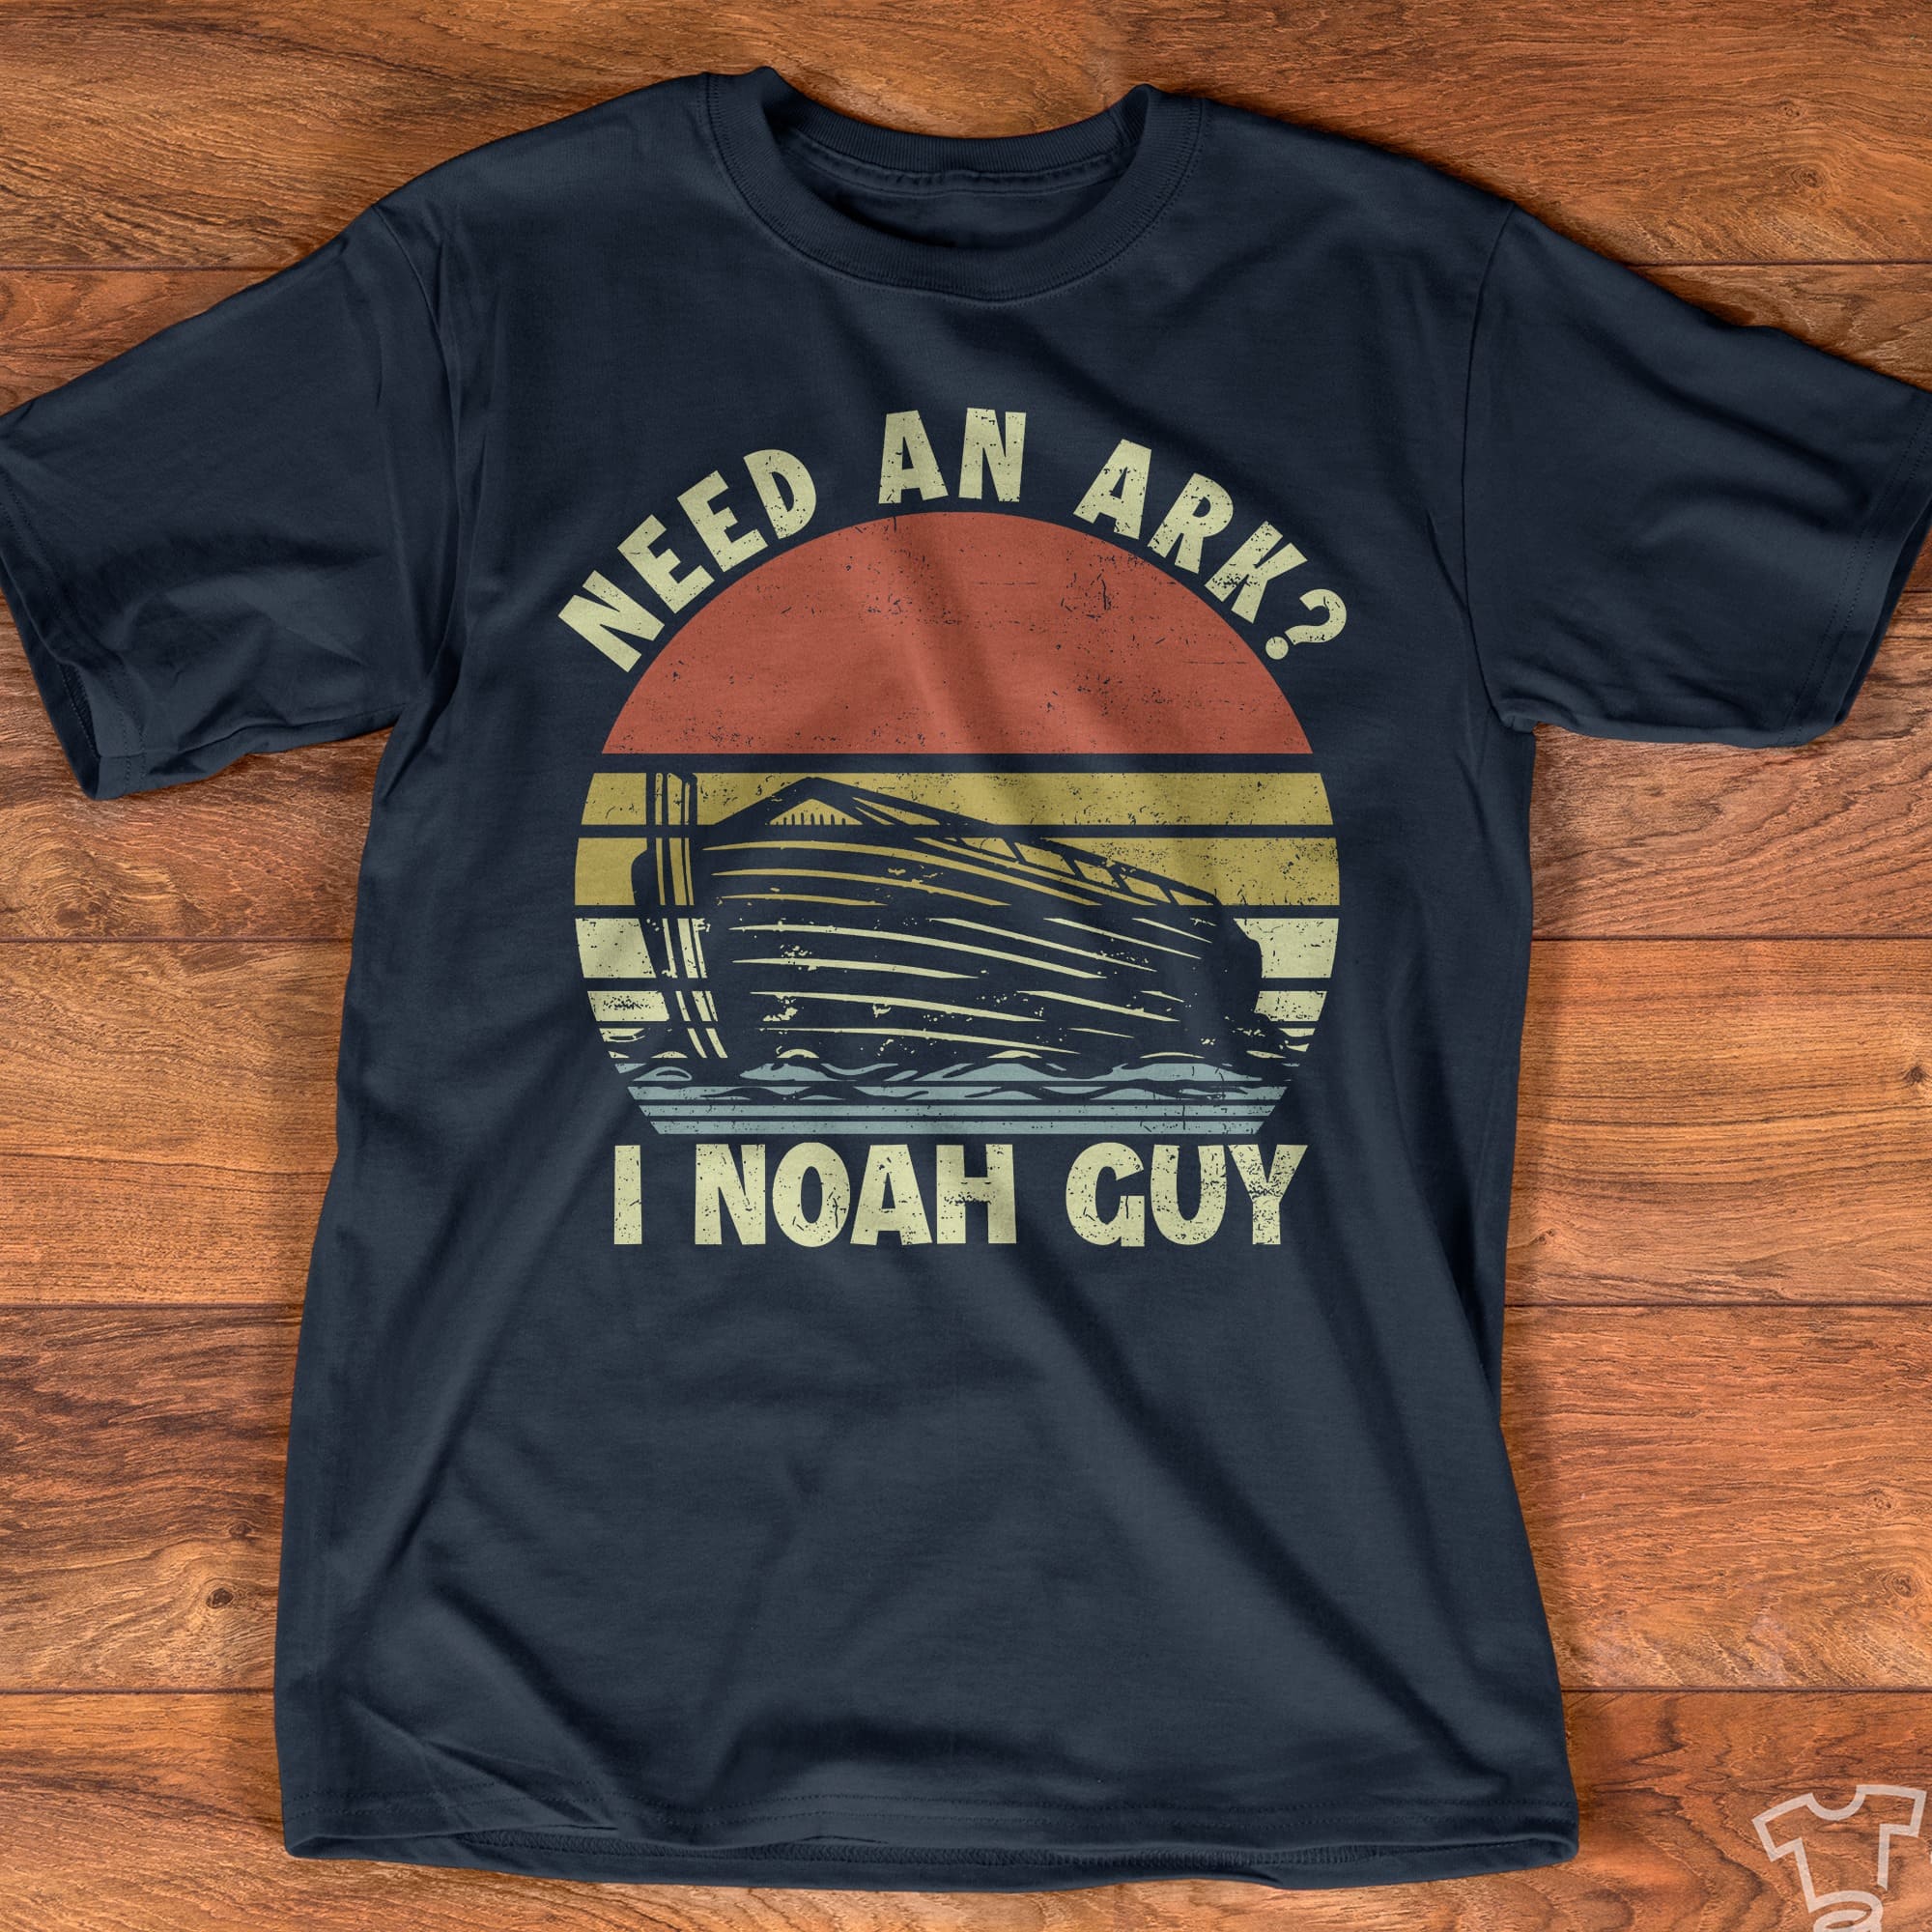 Need an ark I noah guy - Noah's ark story, The great flood